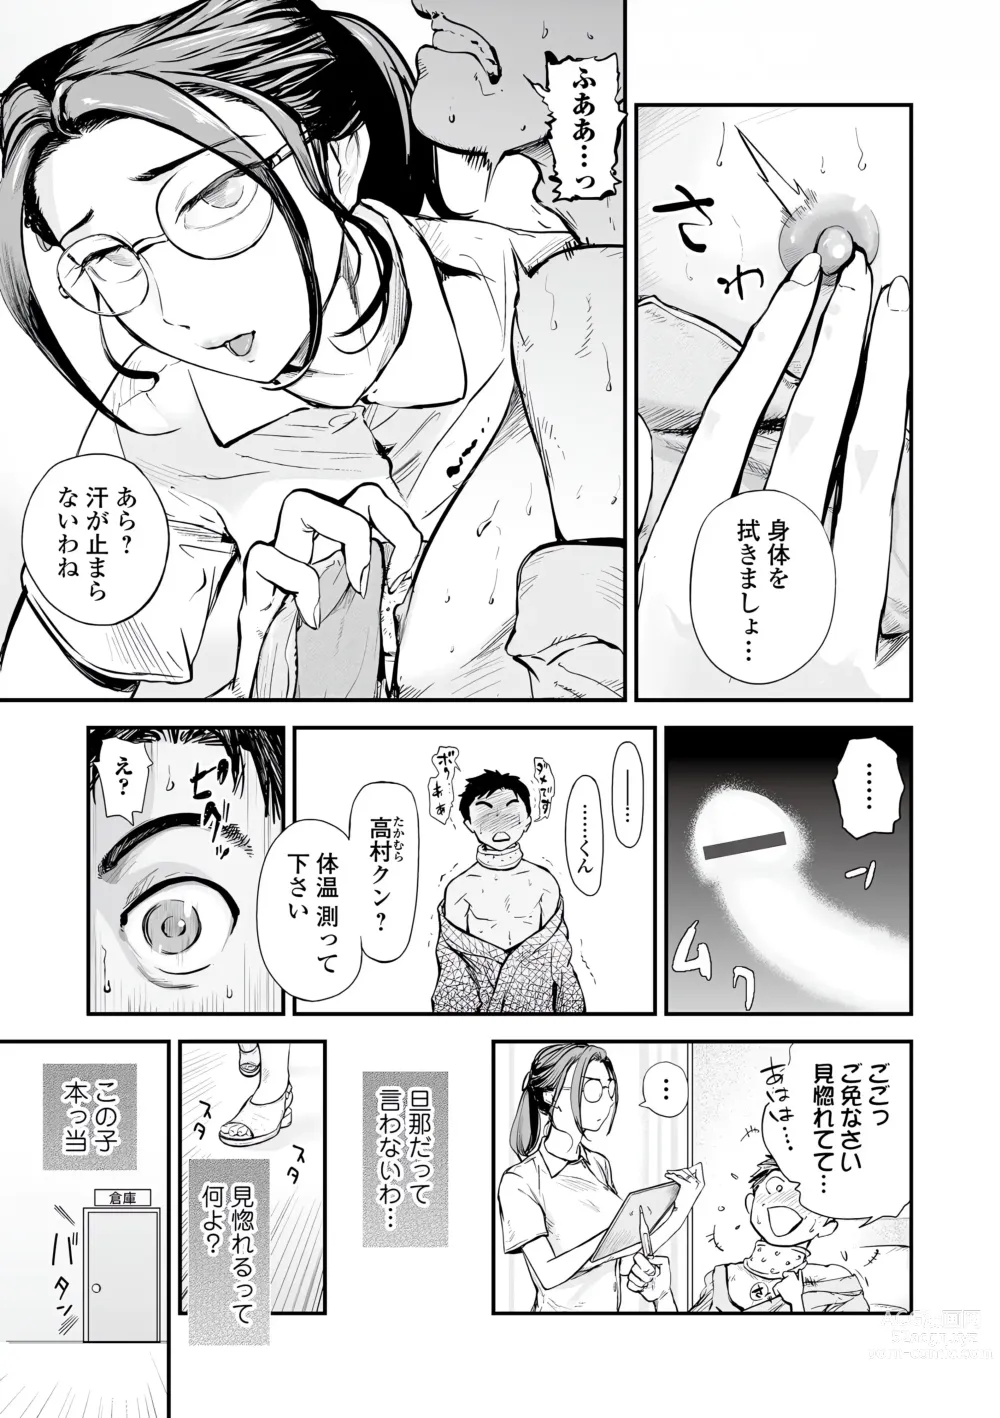 Page 5 of manga Web Comic Toutetsu Vol. 77